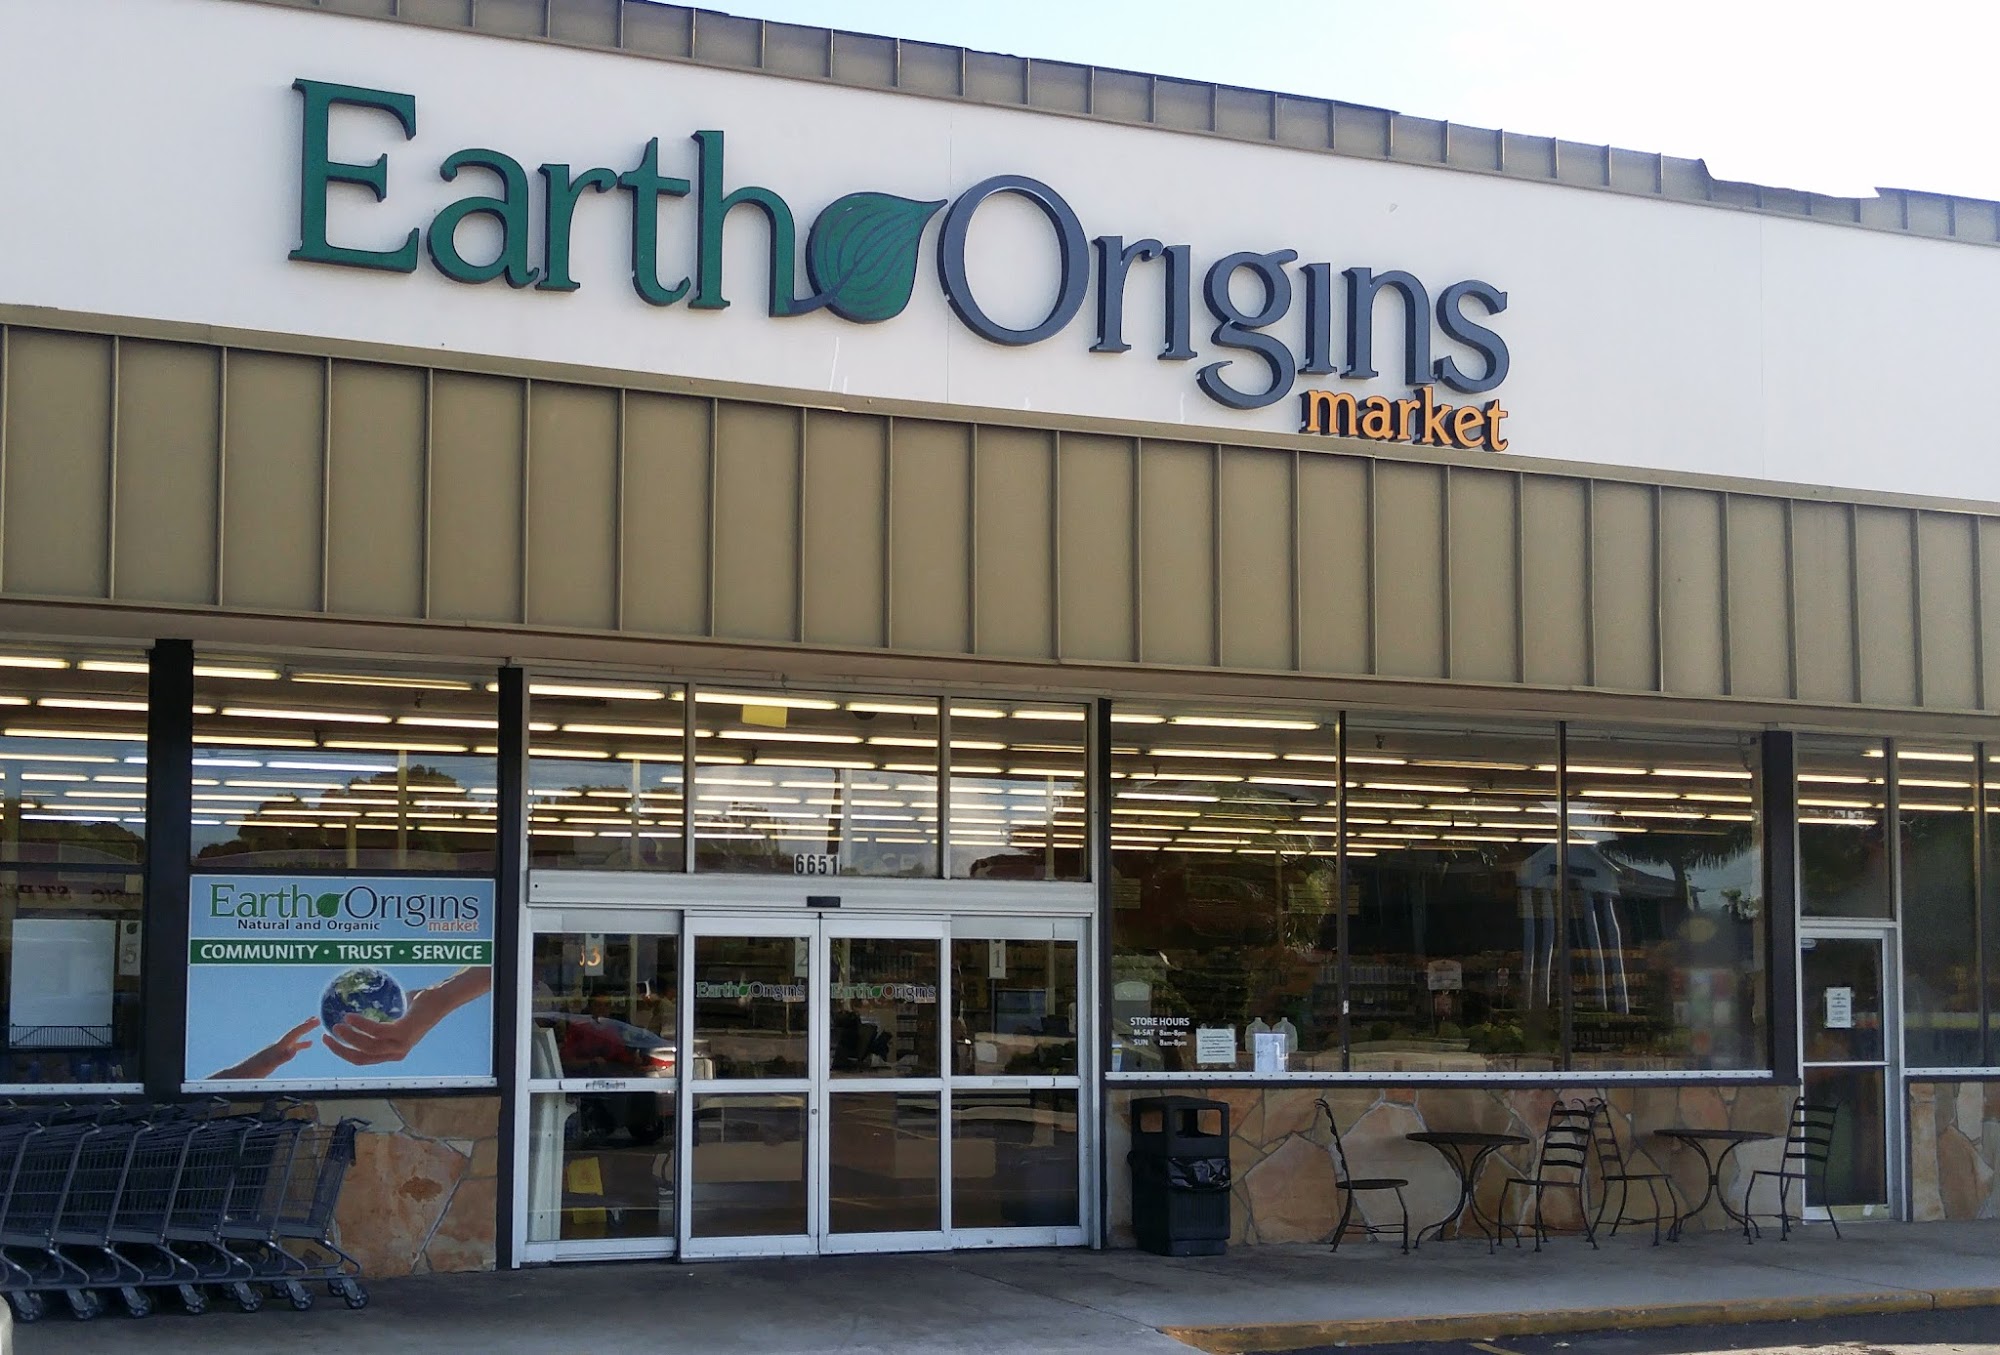 Earth Origins Market